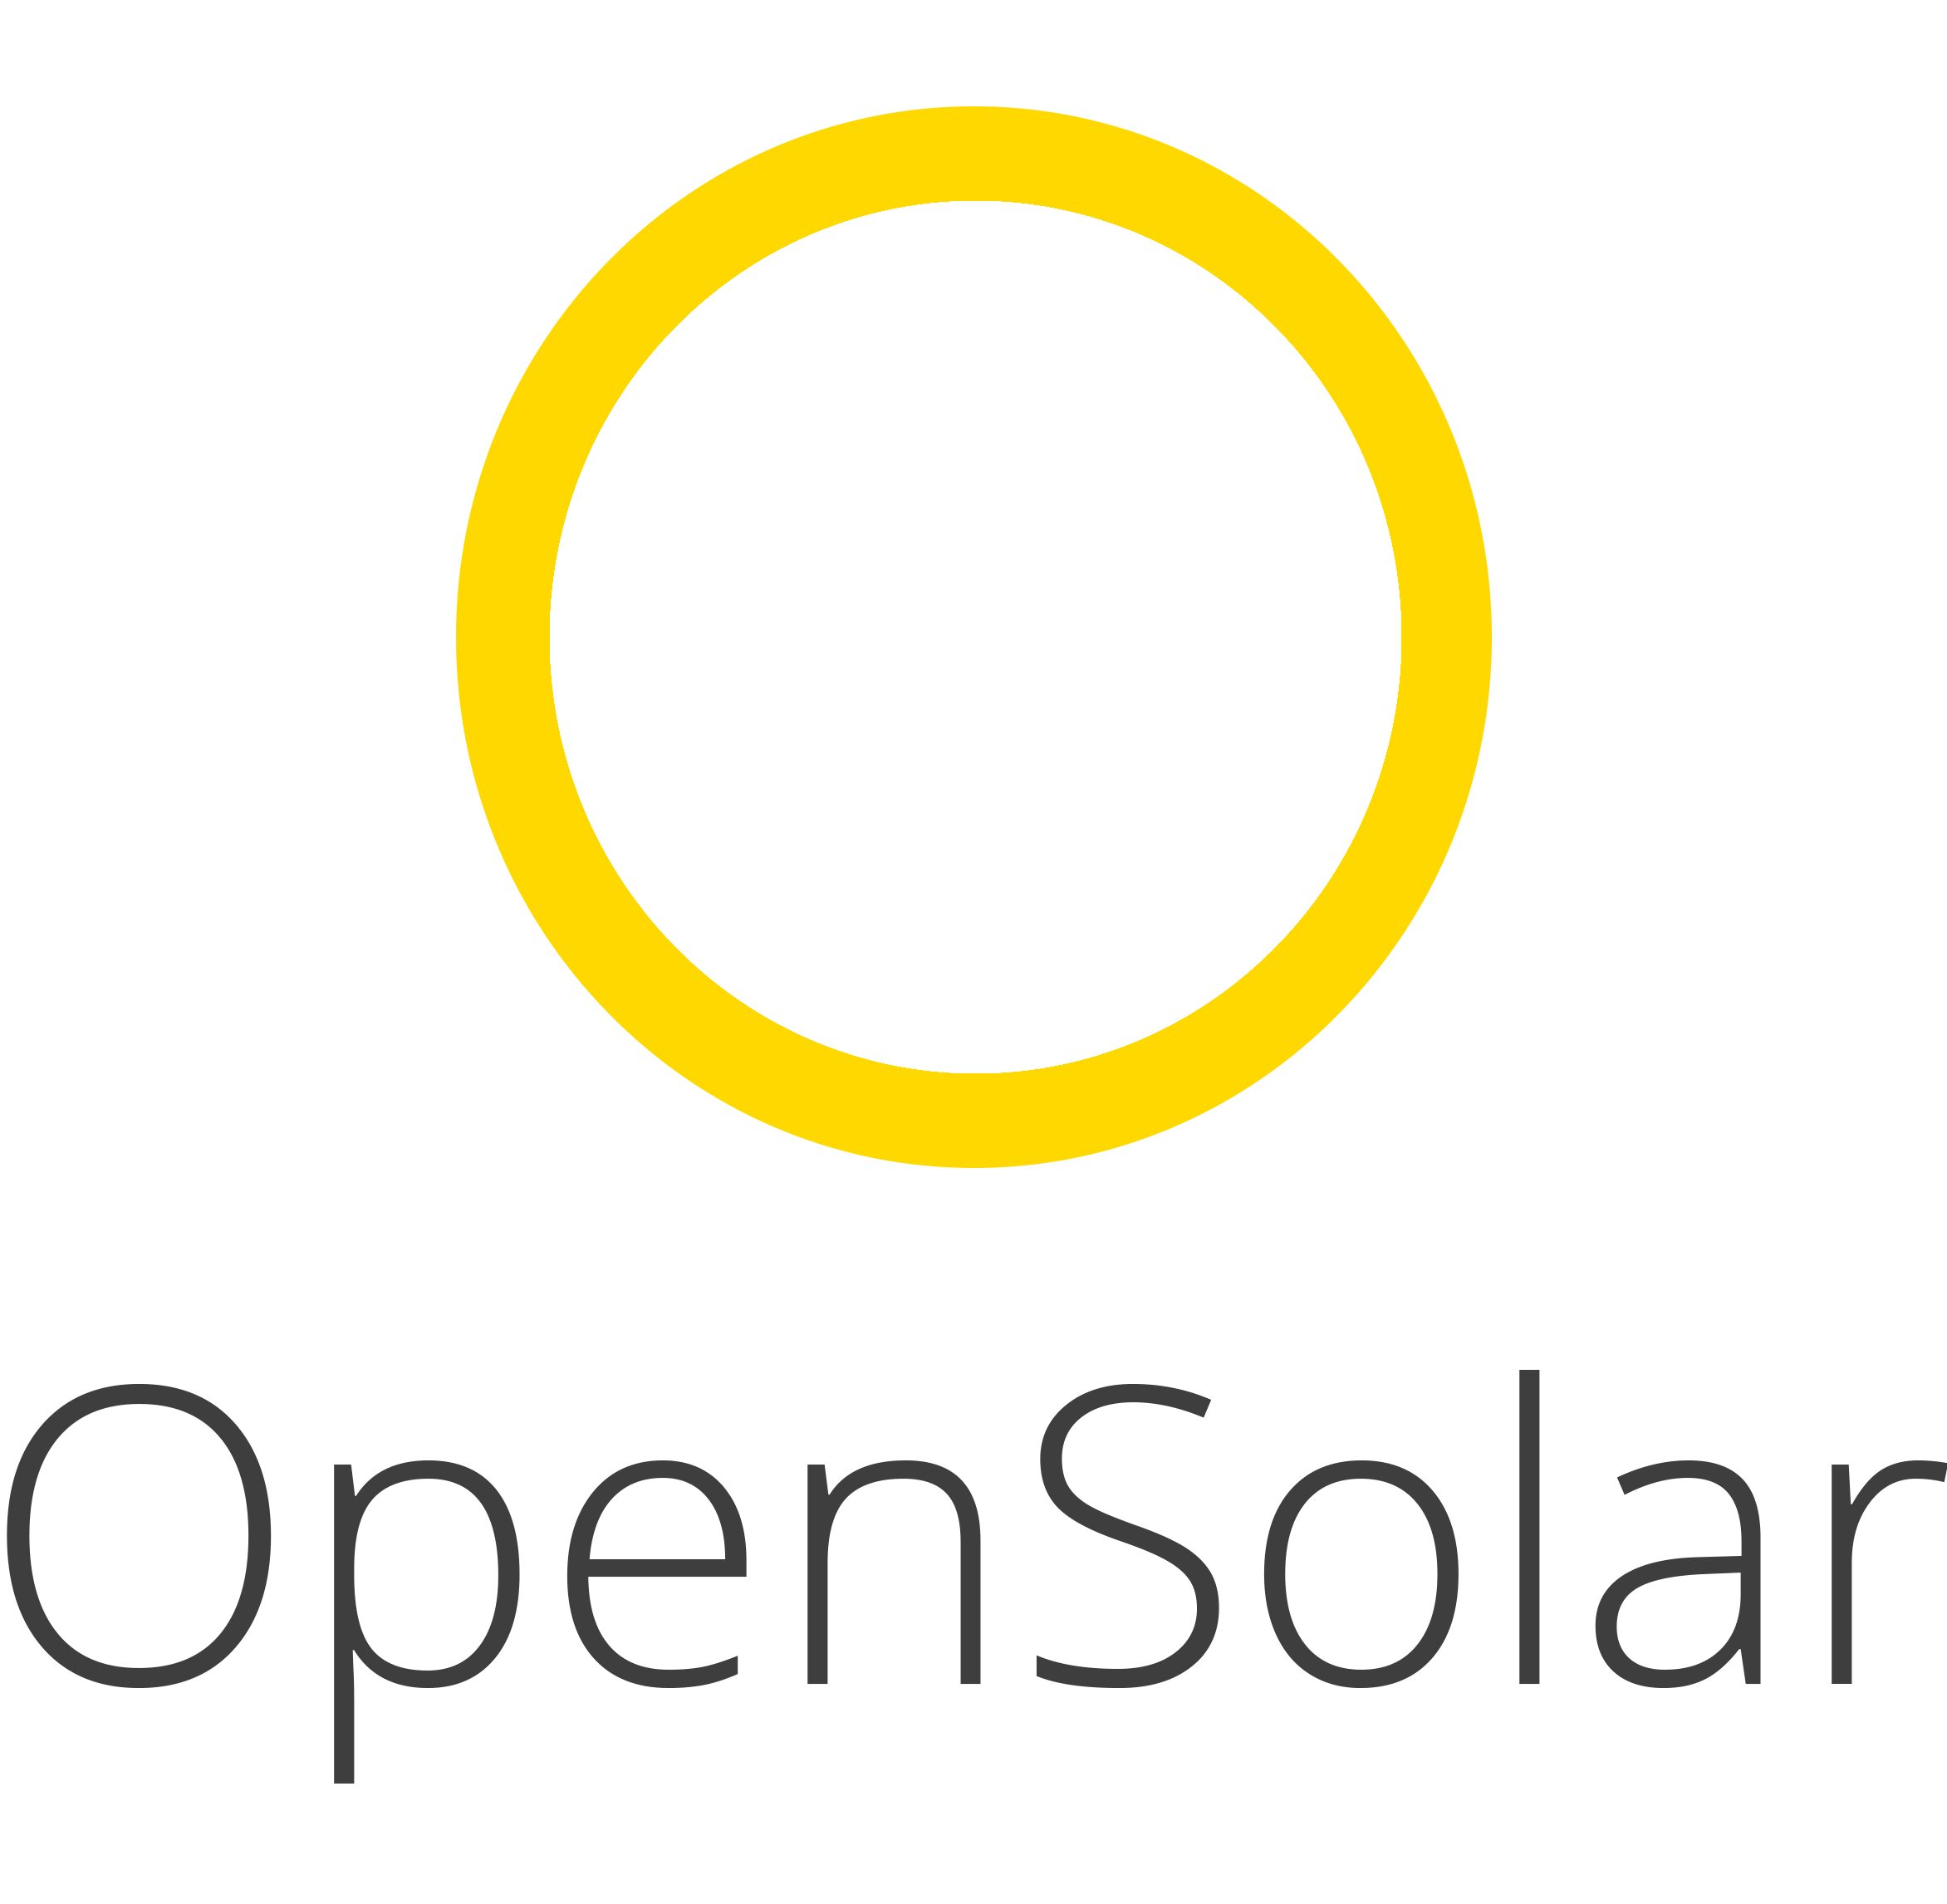 OpenSolar Stacked logo